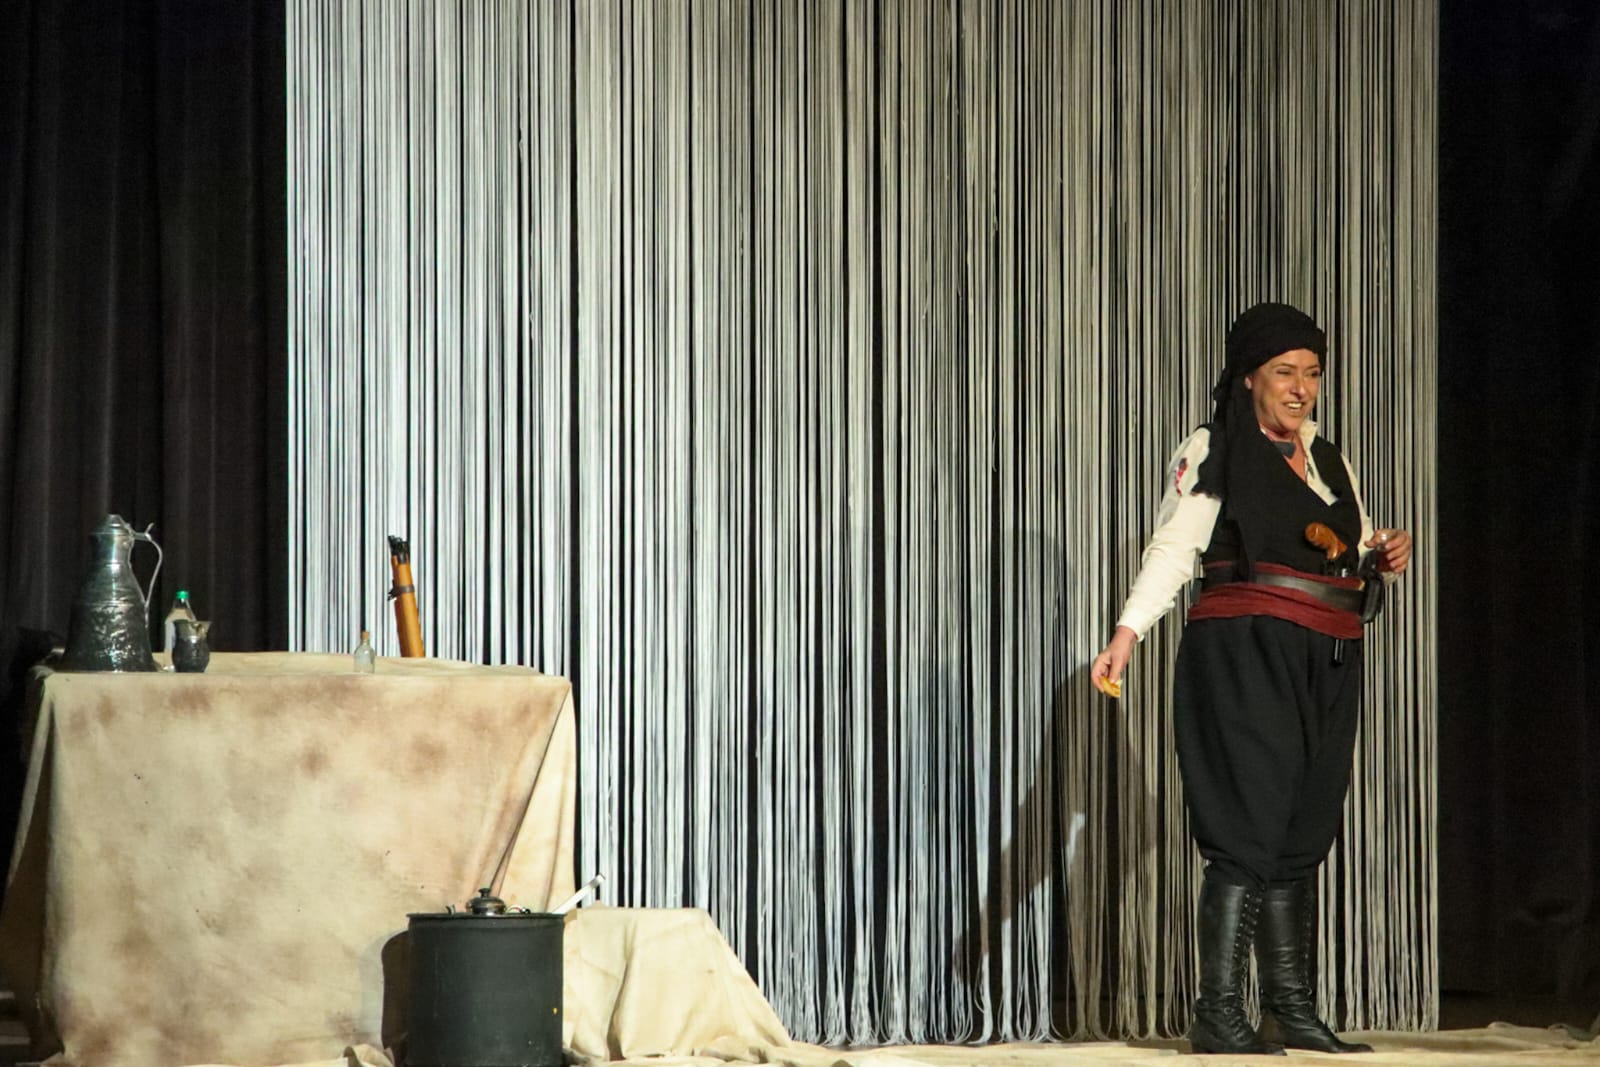 yalova-kultur-sanat-rdkm-kara-fatma-tiyatro-oyun (1)